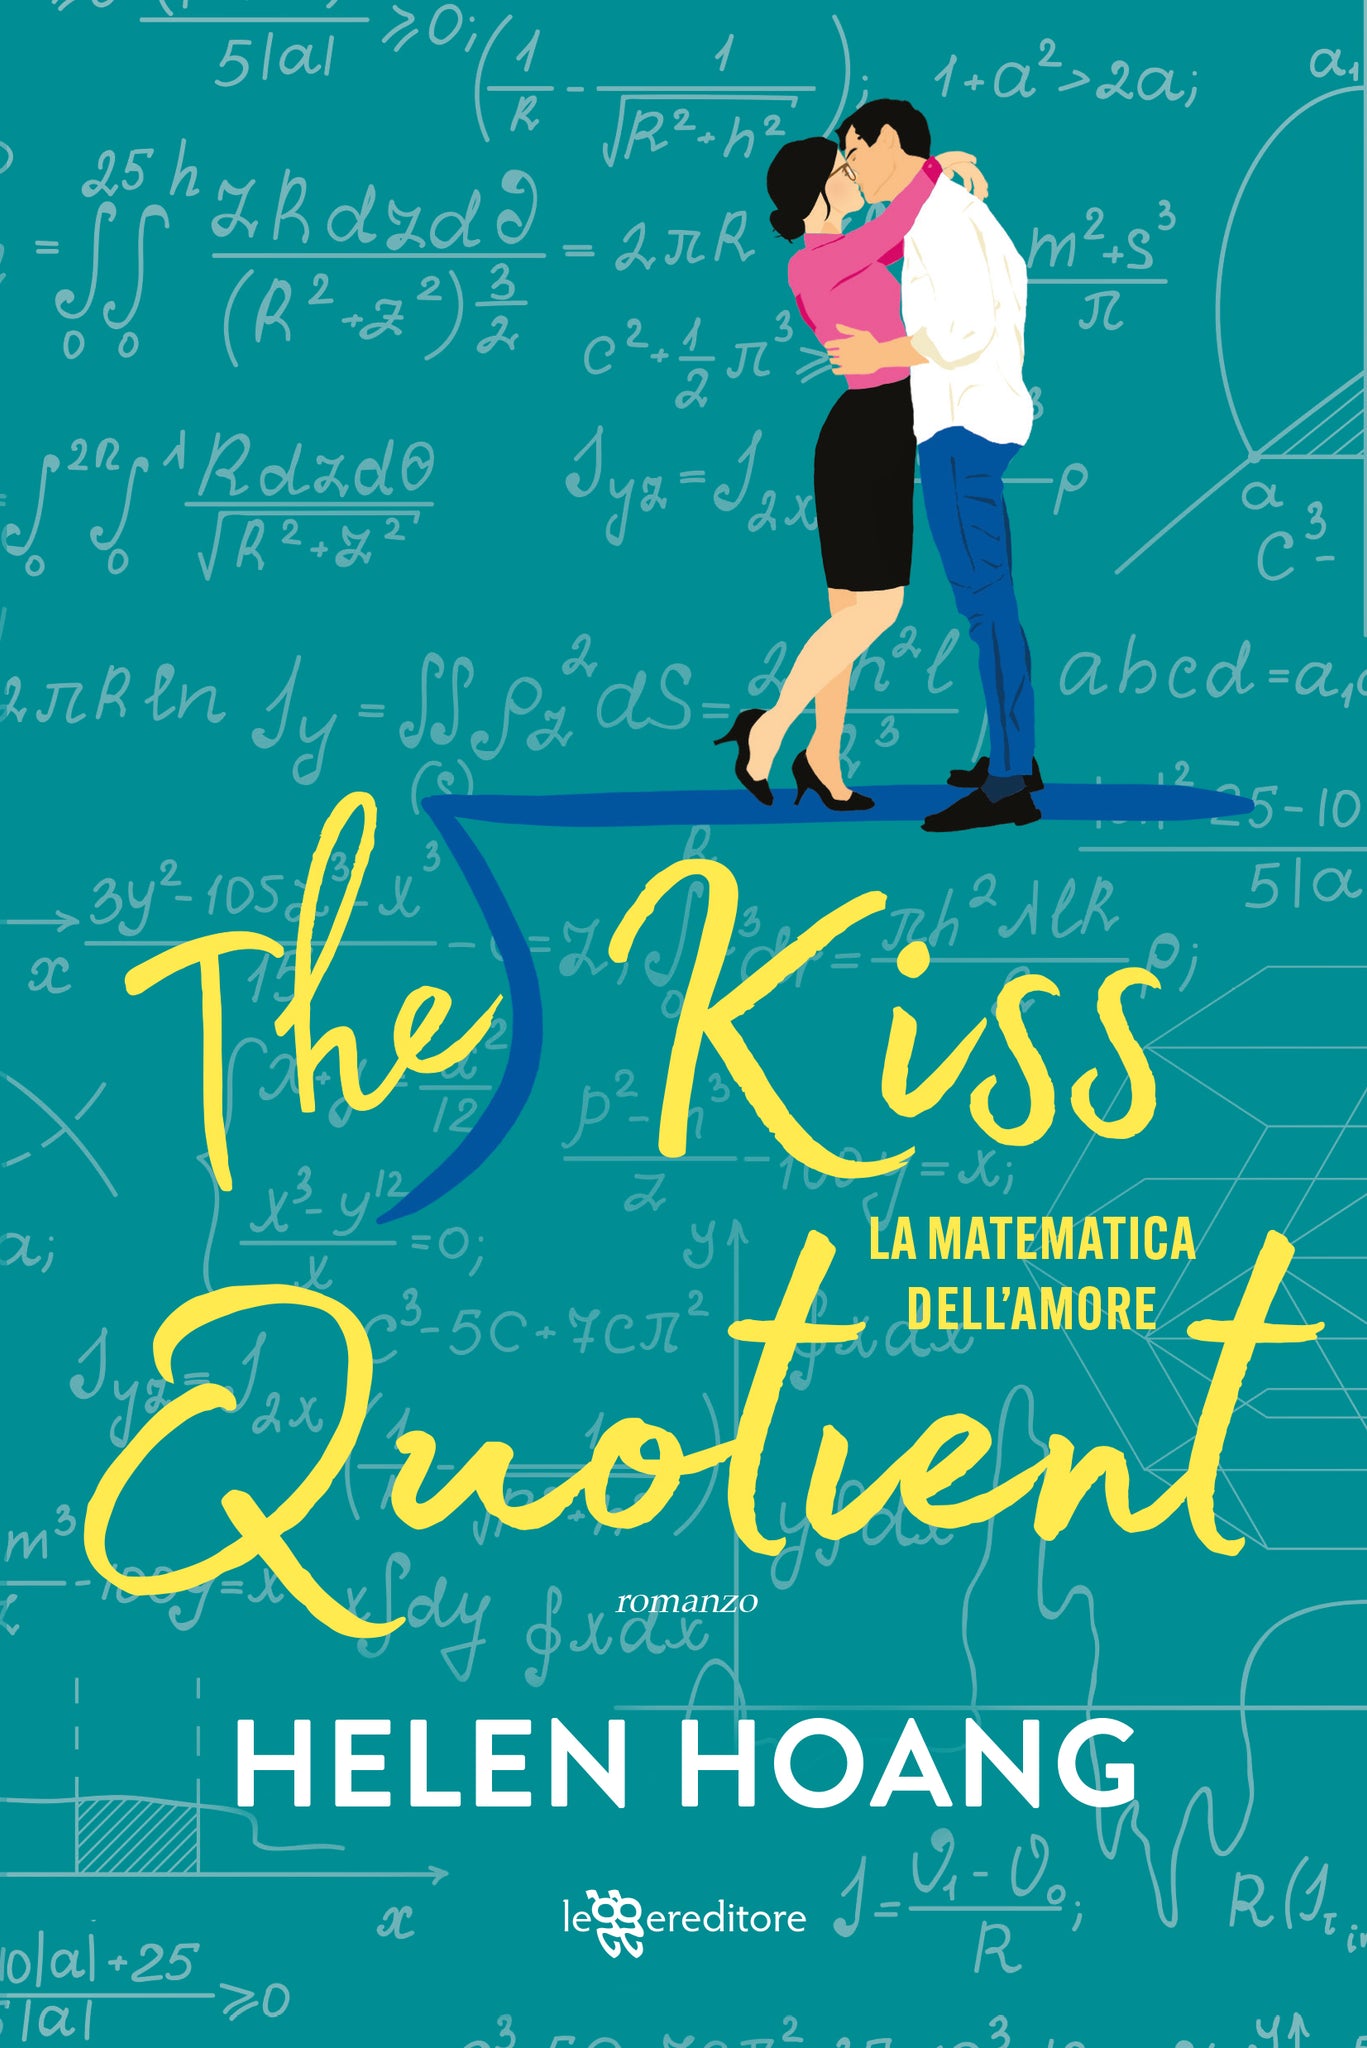 The Kiss Quotient – La matematica dell’amore